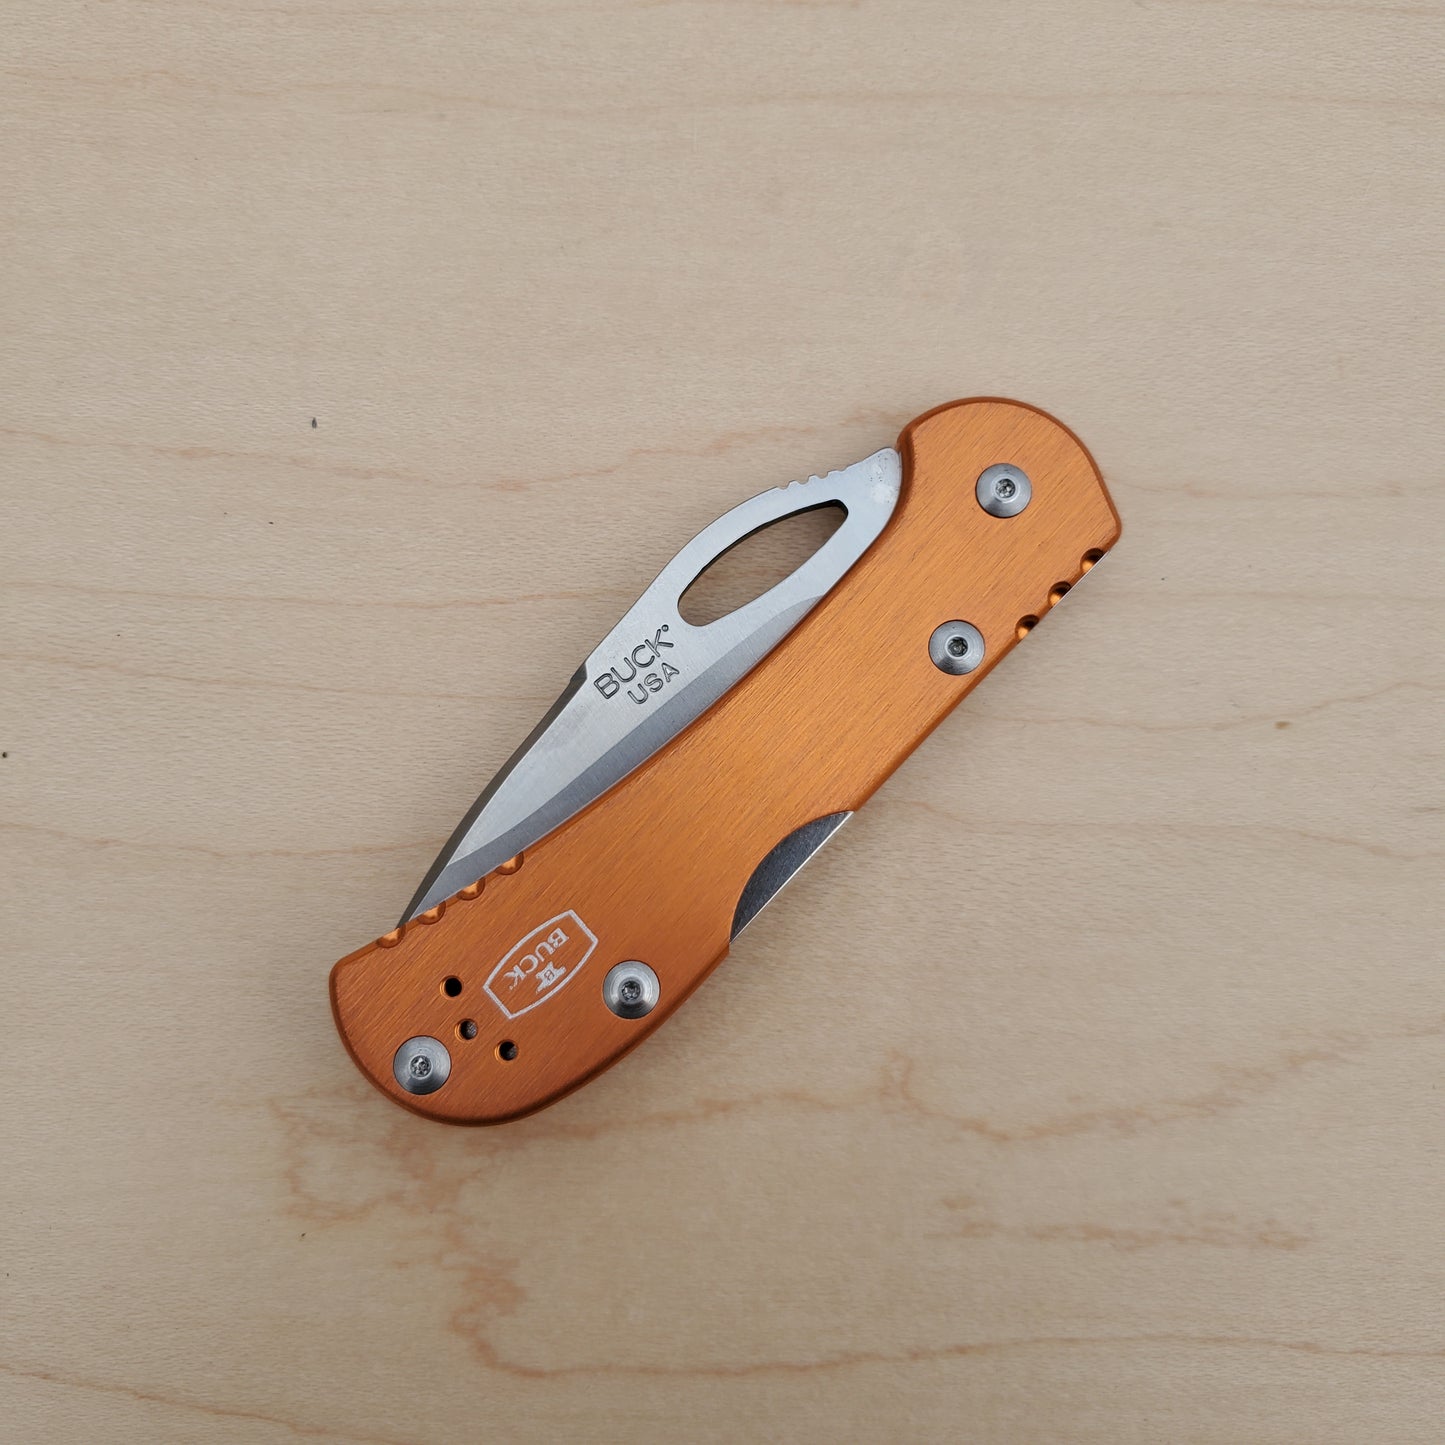 Buck 726 Mini Spitfire Lockback 2.75" Pocket Knife - Orange